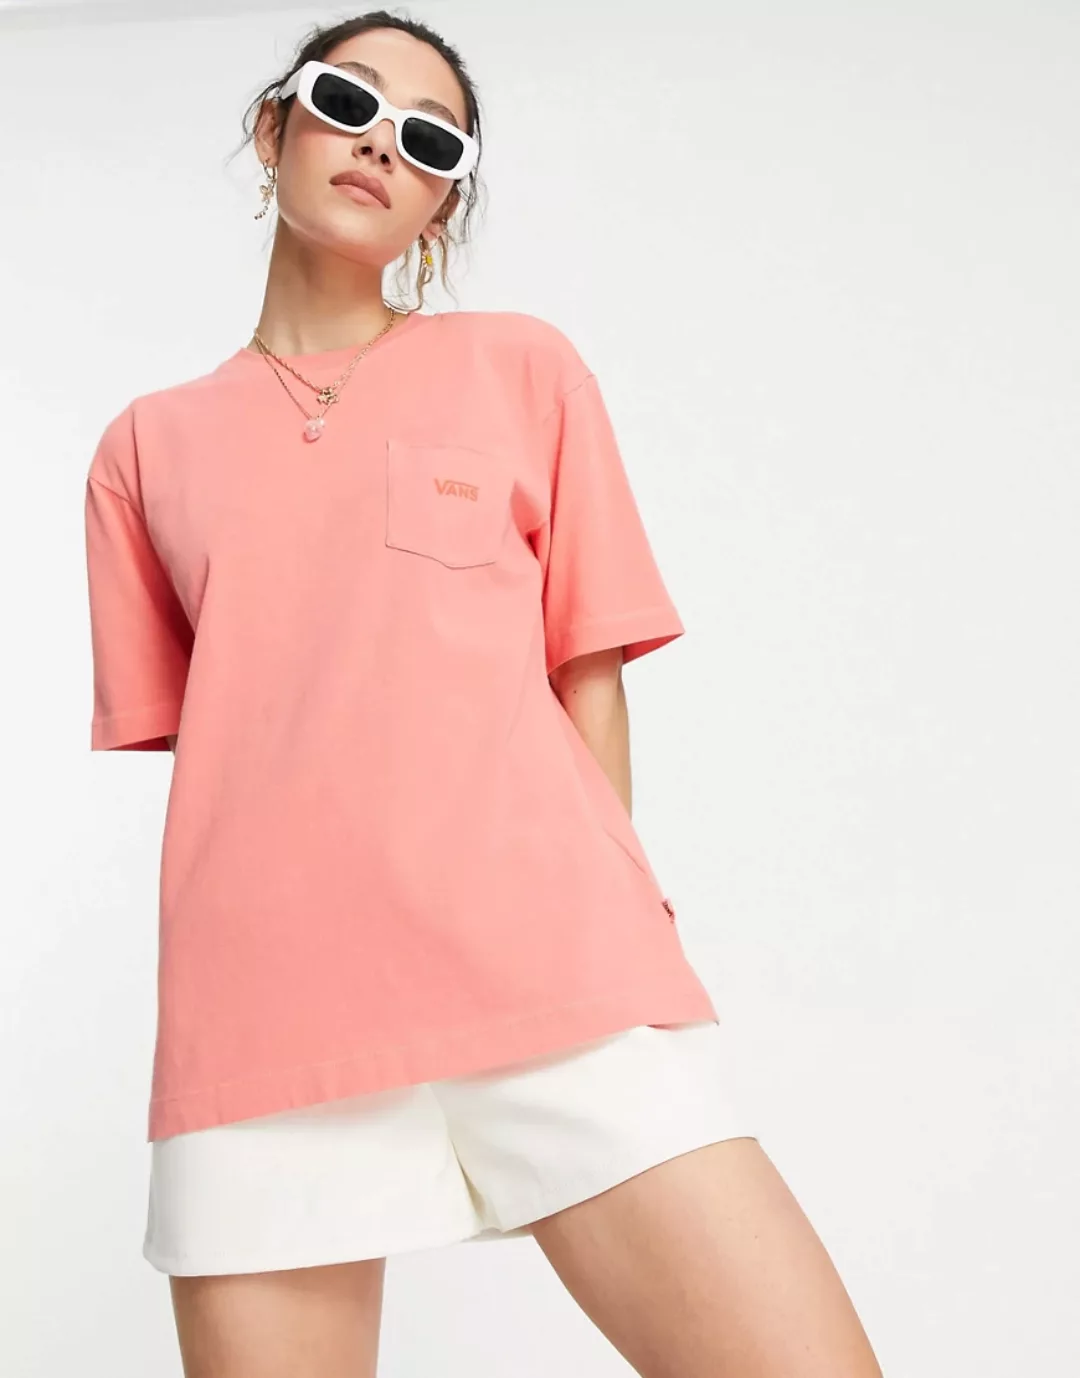 Vans – Pocket V – T-Shirt in Koralle-Rosa günstig online kaufen